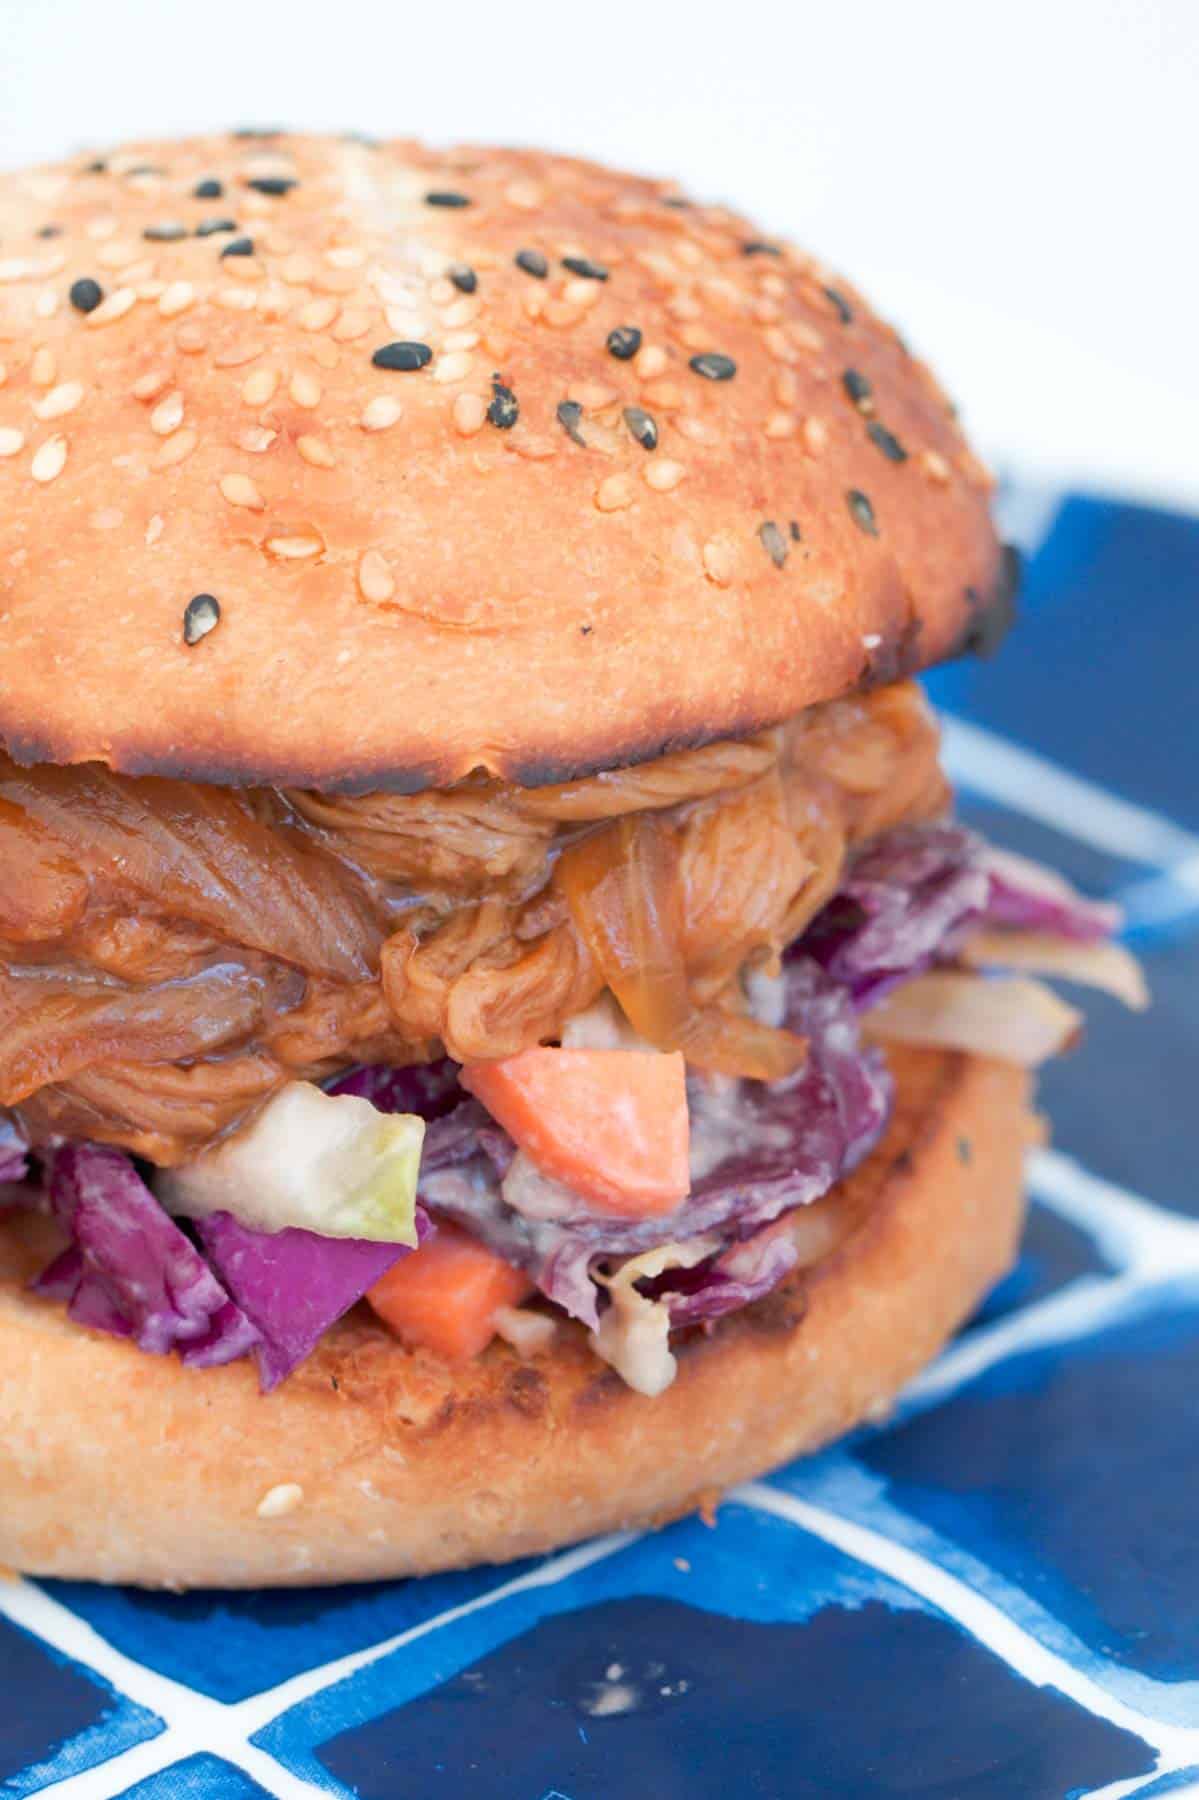 Slaw and pork with a bbq sauce in a burger bun.